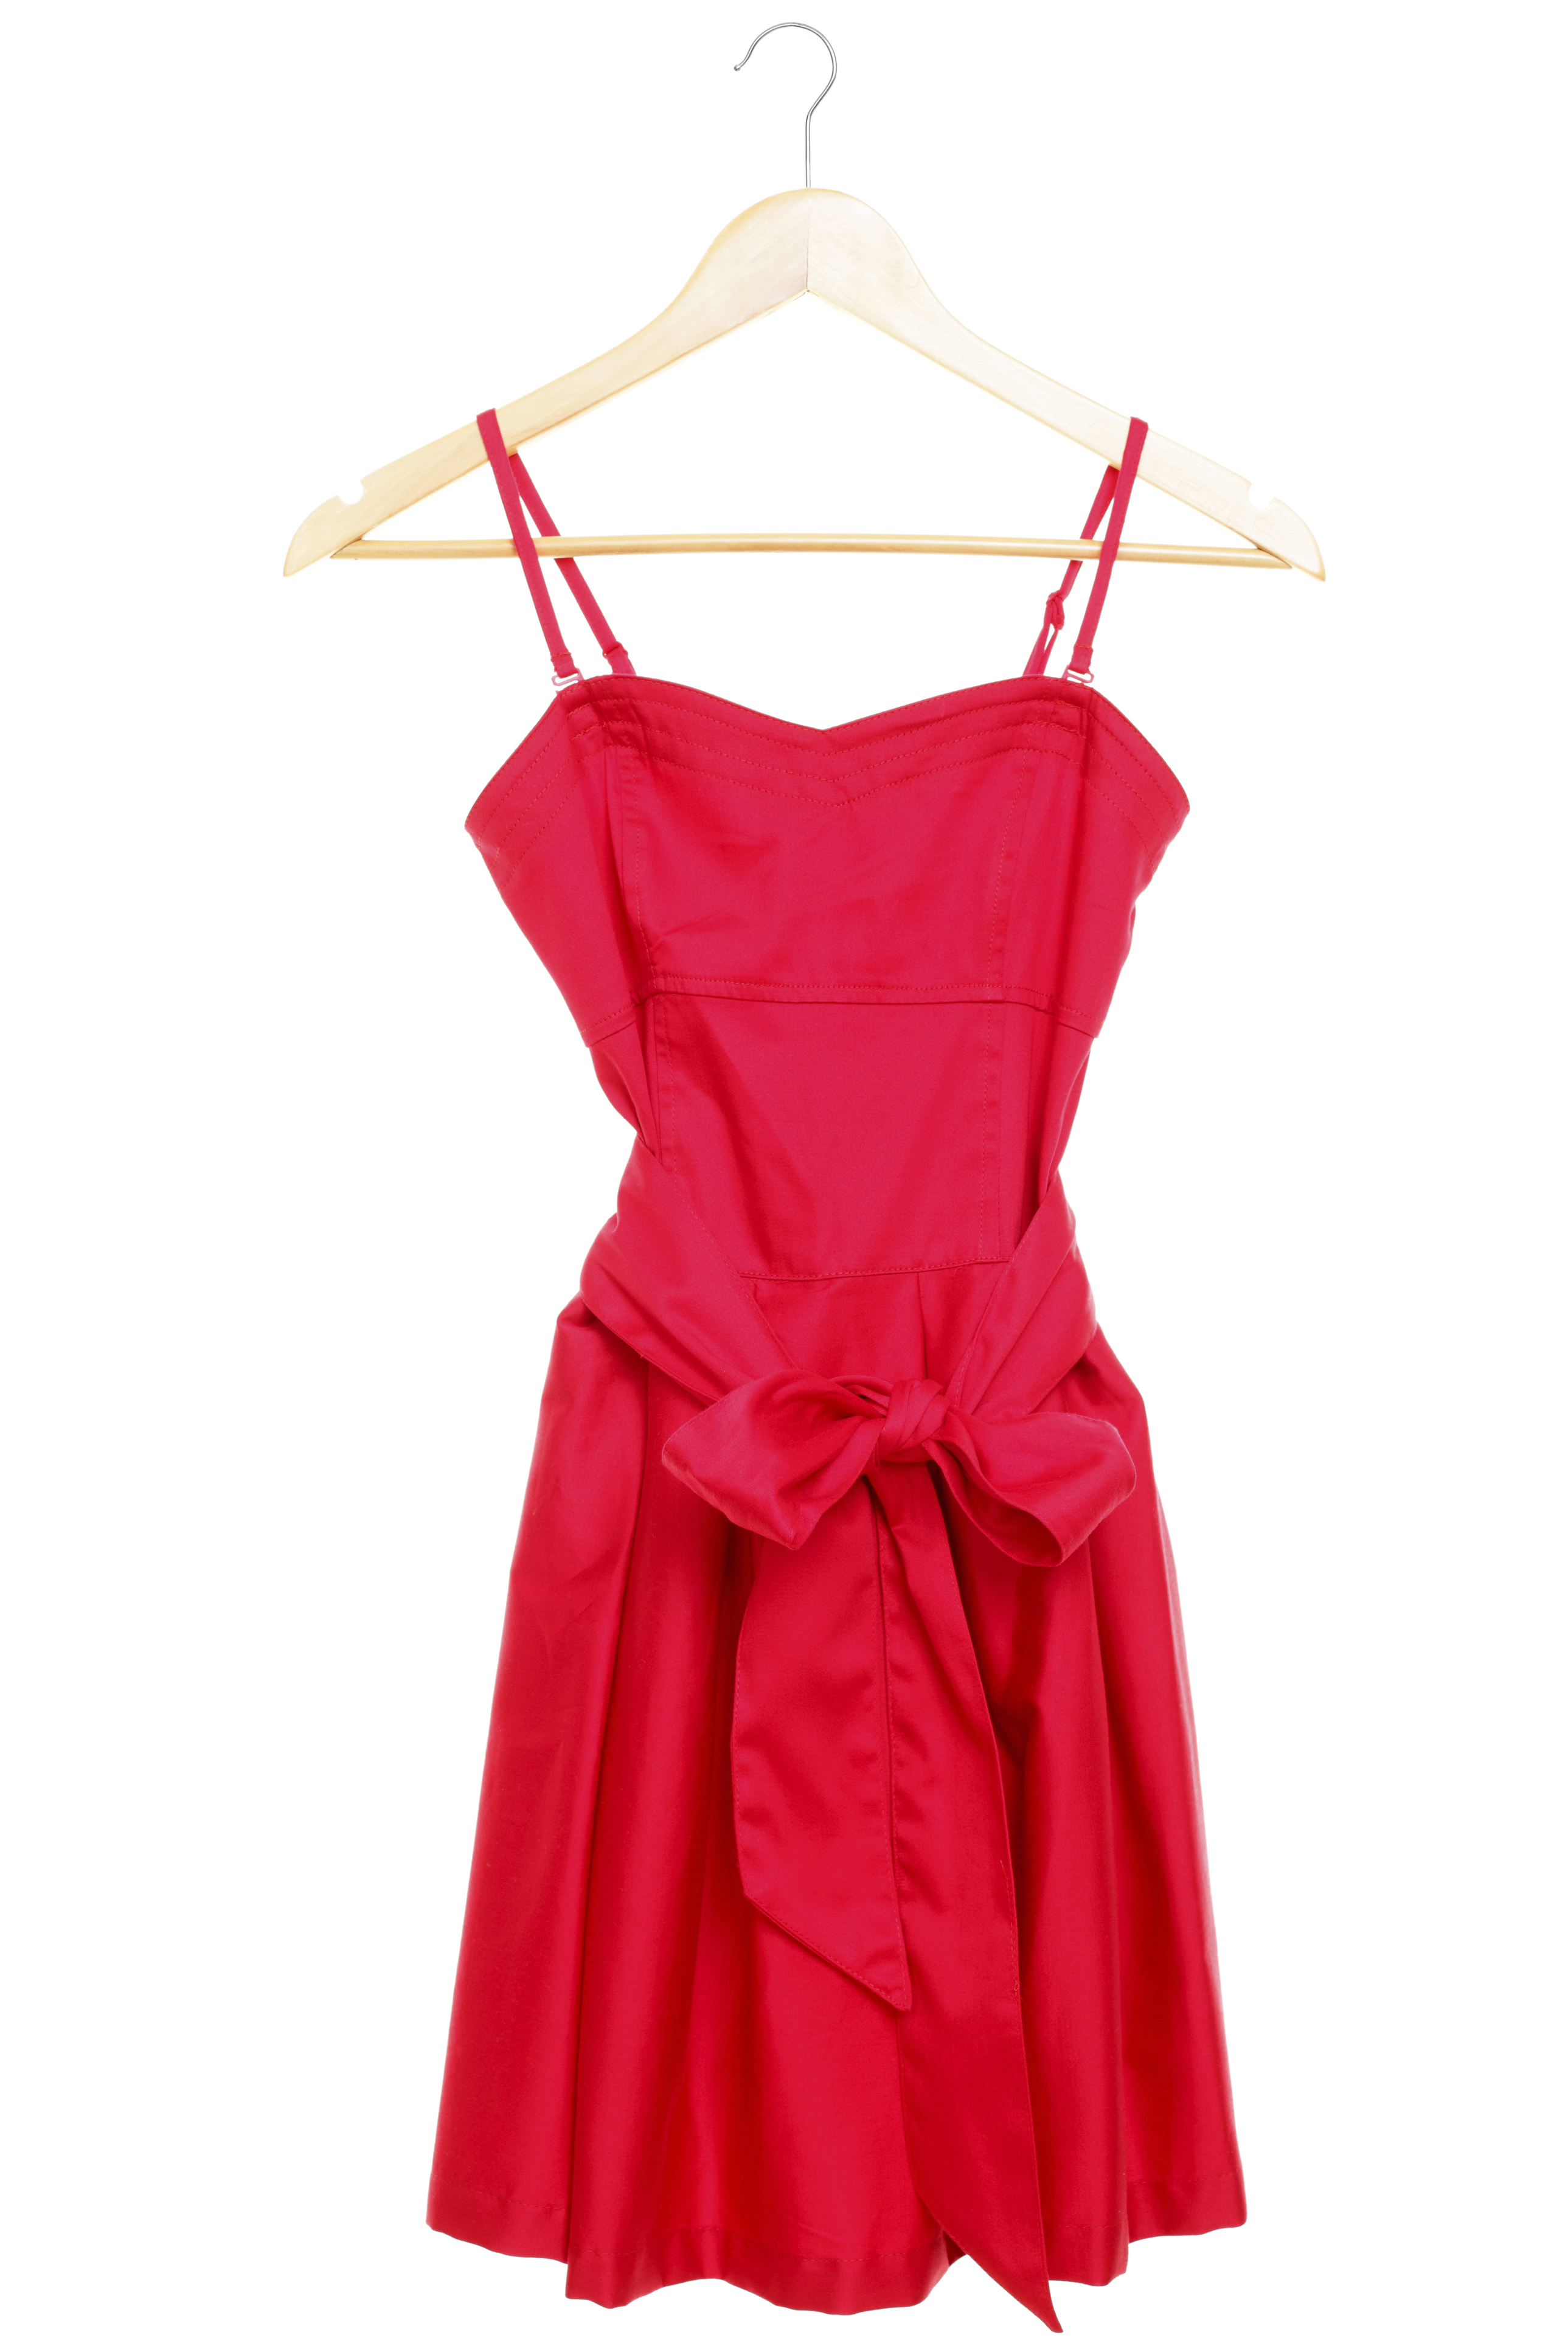 heart_red_dress.jpg